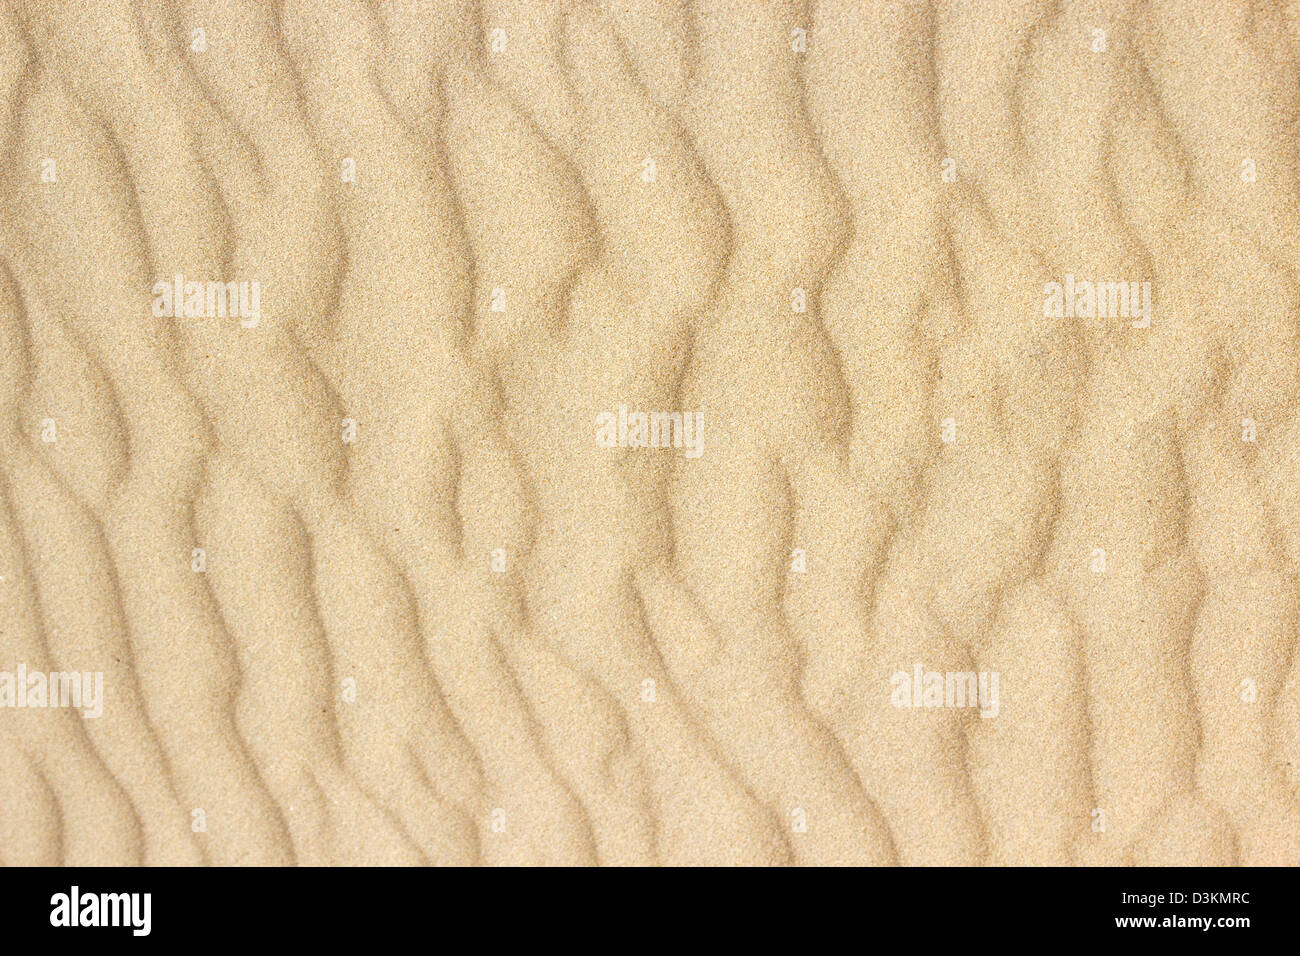 Beach sand Stock Photo